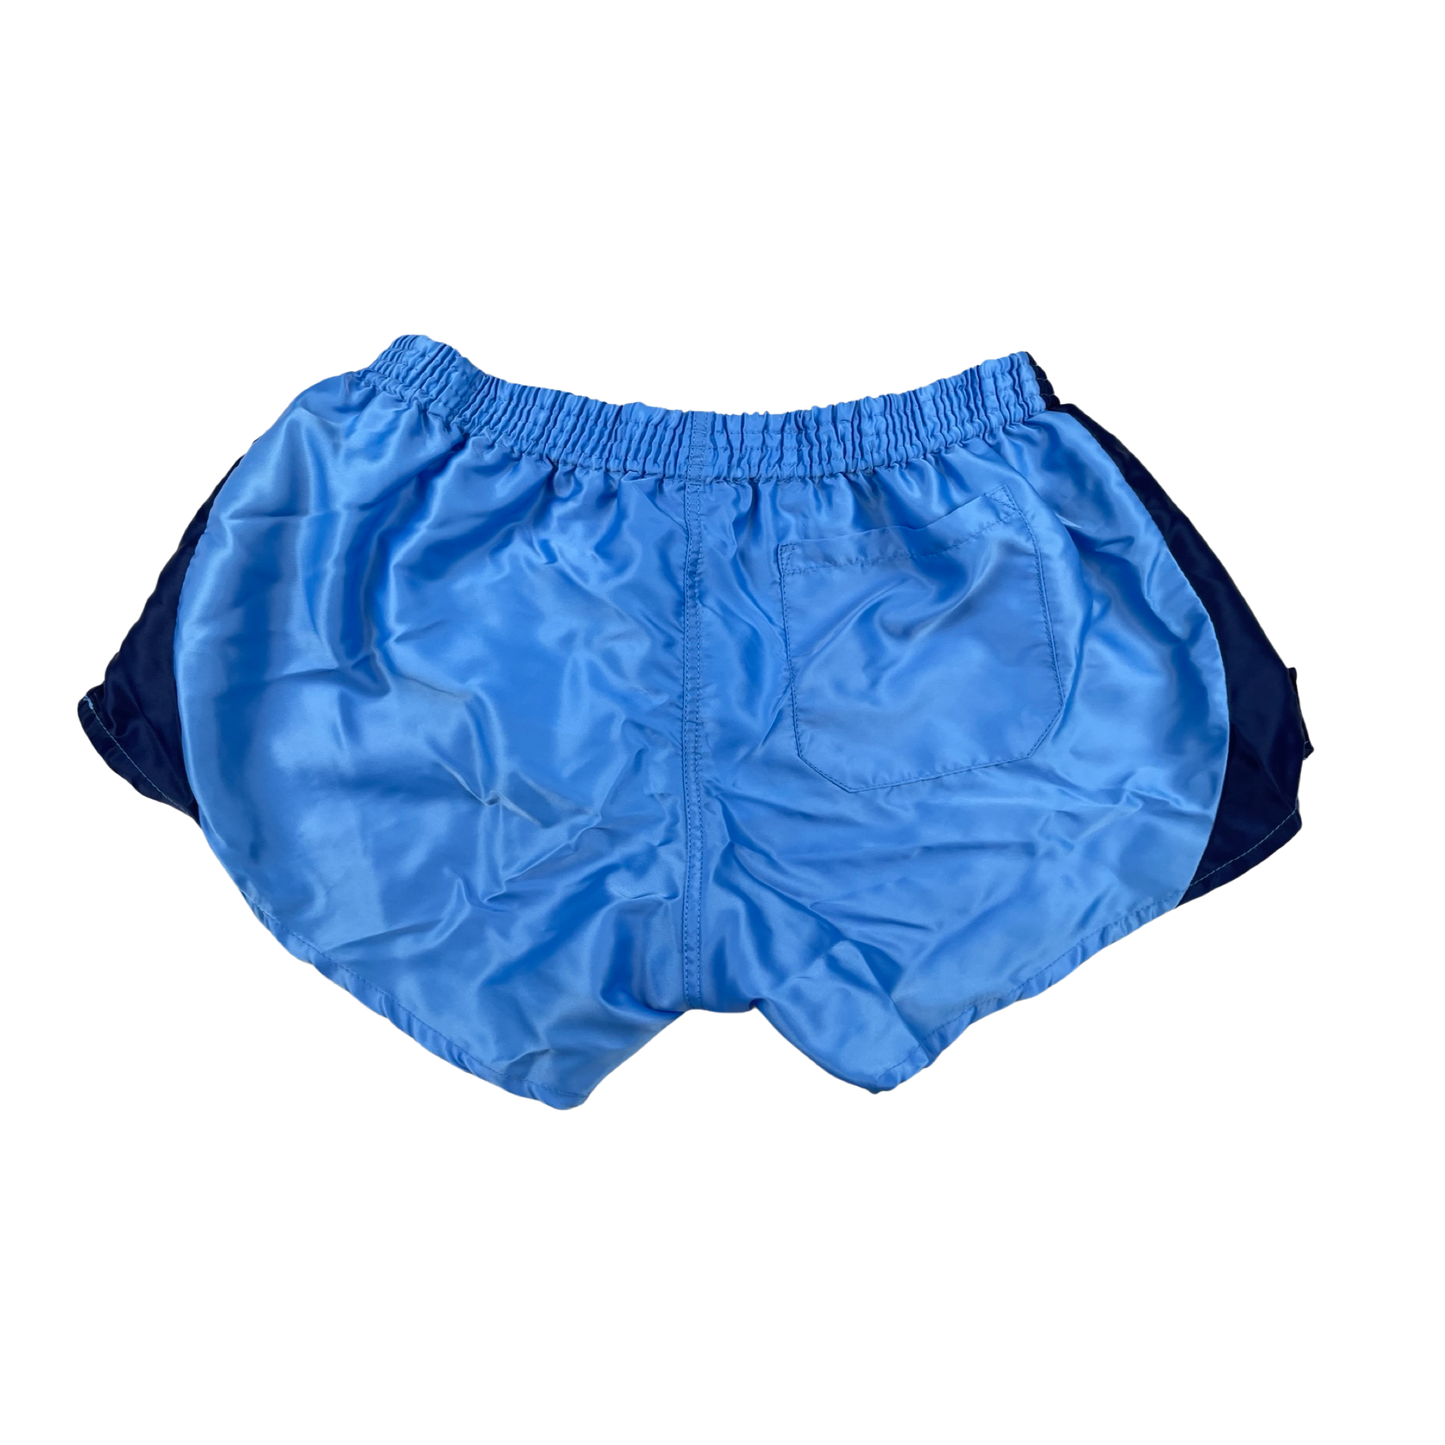 Vintage 80s 90s Puma Blue Nylon Mini Shorts S